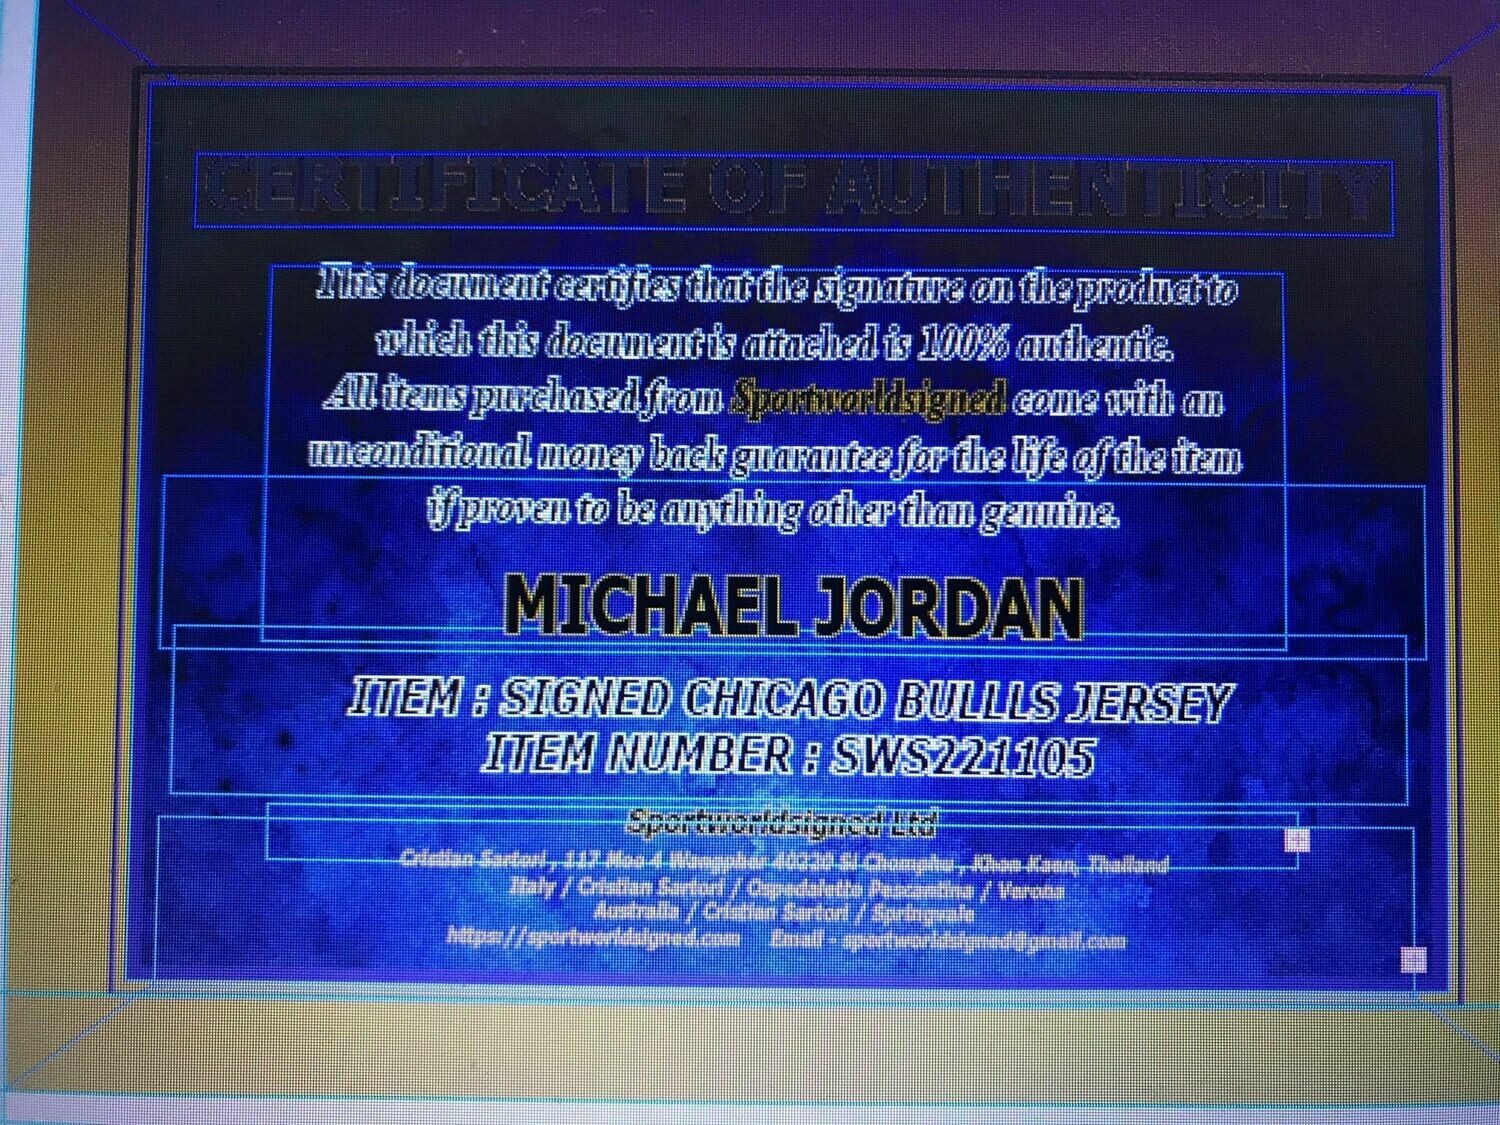 MAGLIA AUTOGRAFATA MICHAEL JORDAN SIGNED  MICHAEL JORDAN  AUTOGRAFO SIGNED AUTOGRAPH MICHAEL JORDAN  MJ23  AUTOGRAPH SIGNED  JERYSEY AUTOGRAPH SWS221105